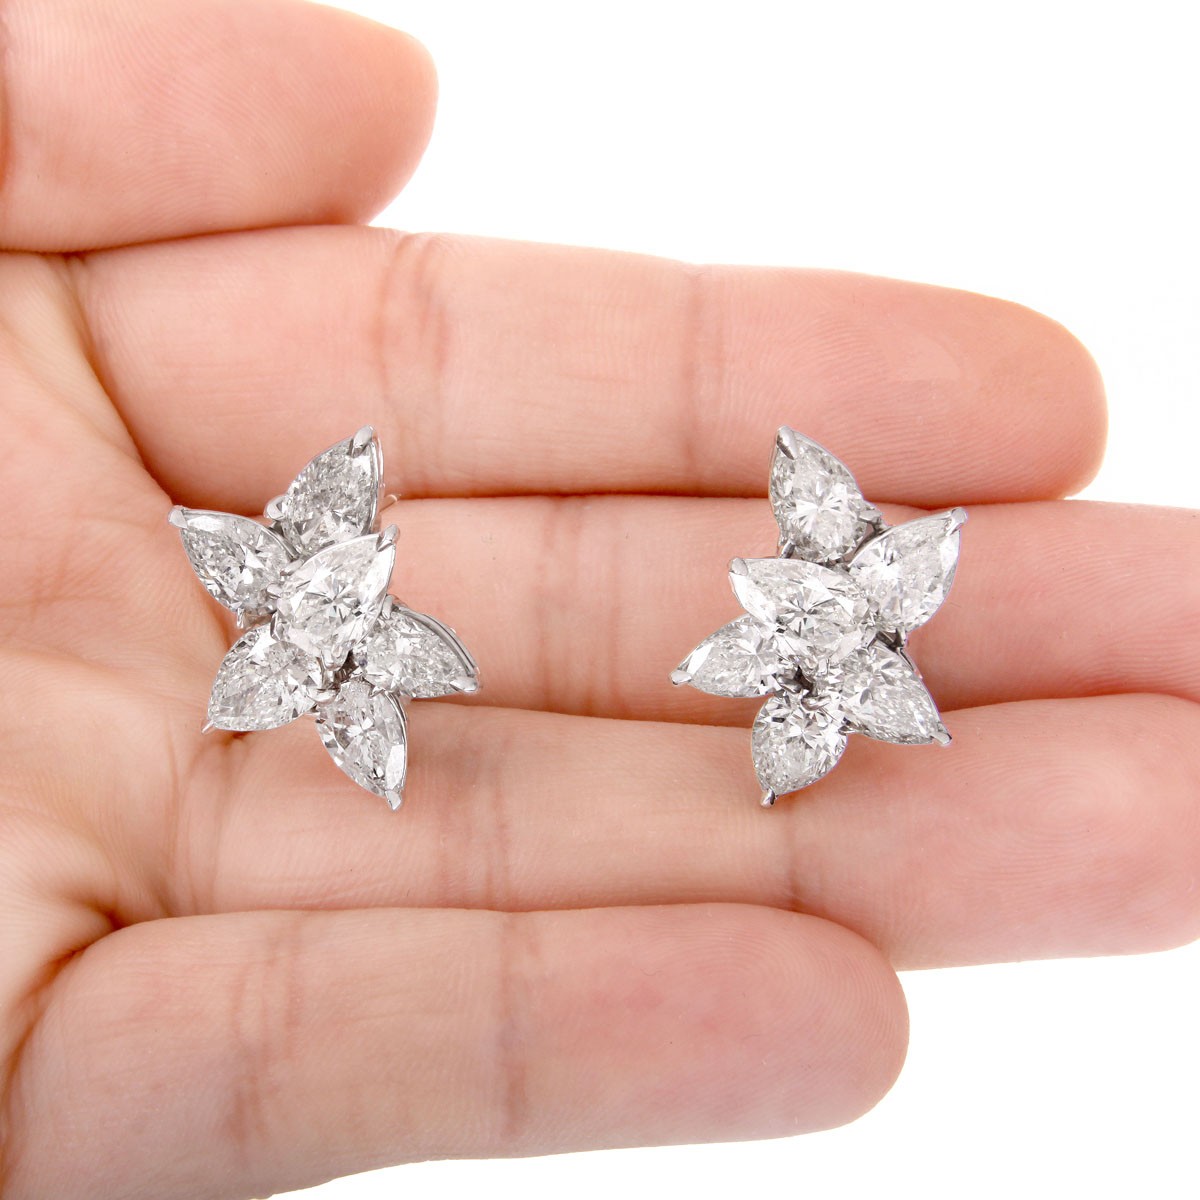 Harry Winston style 14.0 Carat Diamond Earrings